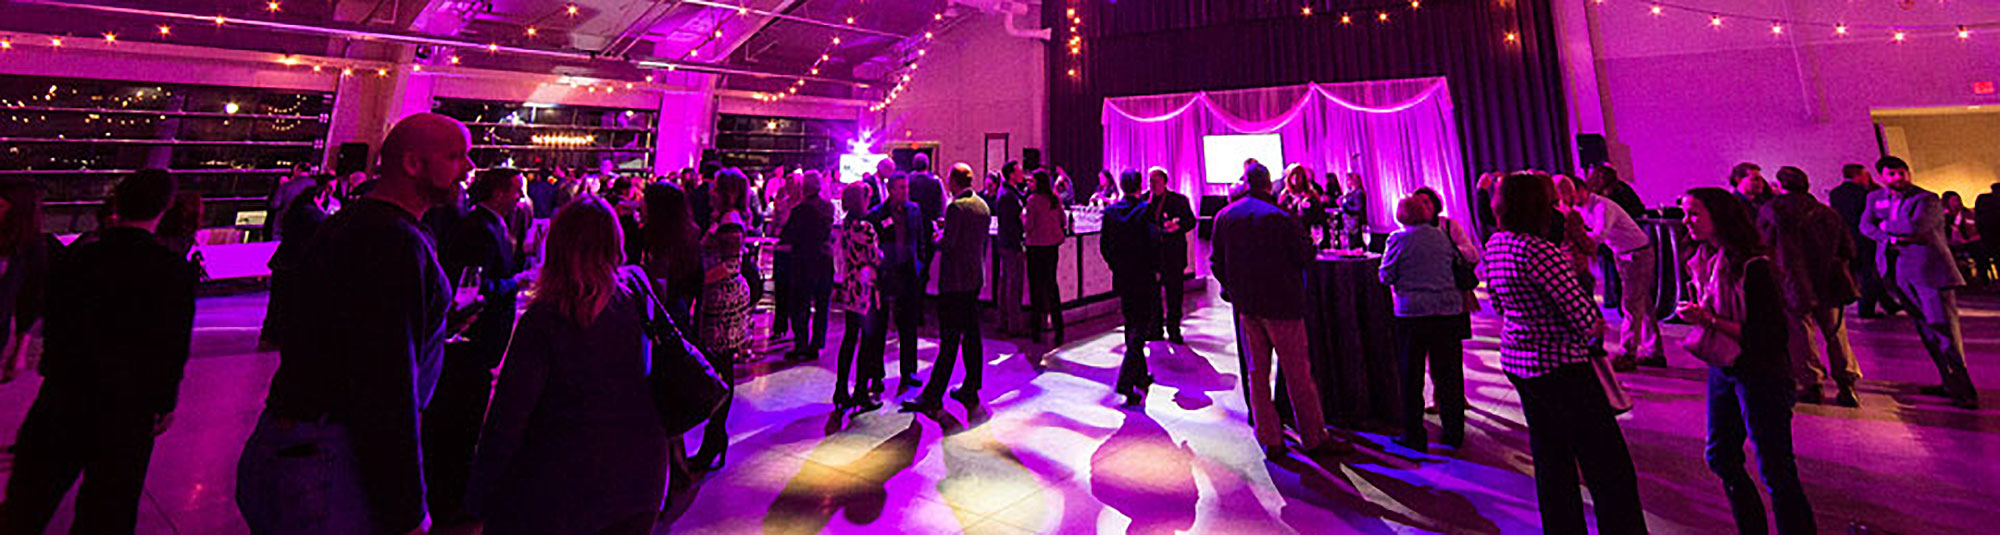 Special Event | Landerhaven the premier Cleveland wedding event venue.